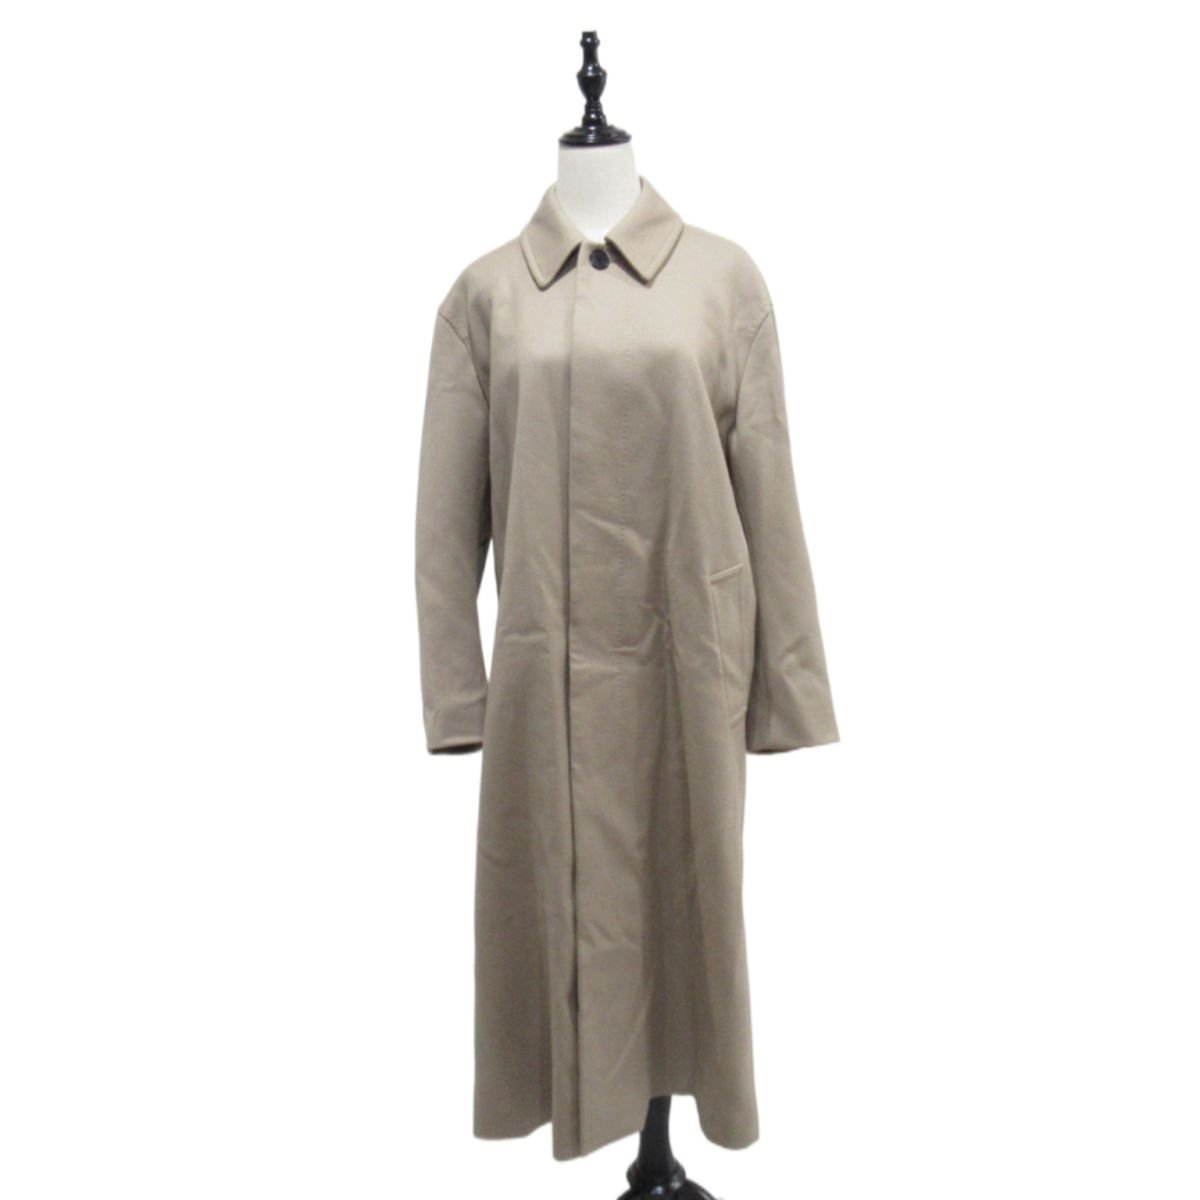  new goods unused BLAMINKbla mink wool oversize long turn-down collar coat 7925-299-0158 36 S rank beige regular price 231000 jpy 